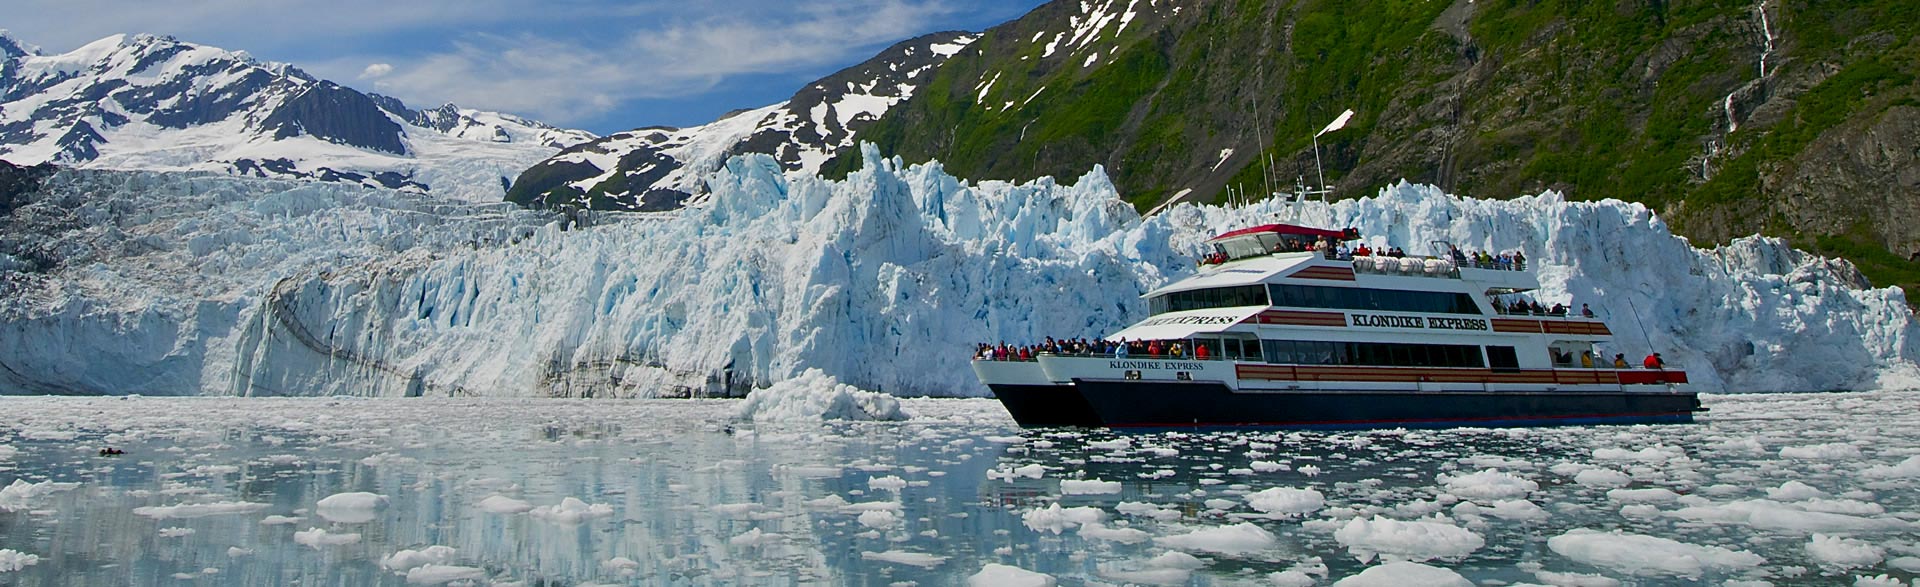 glacier cruise alaska whittier